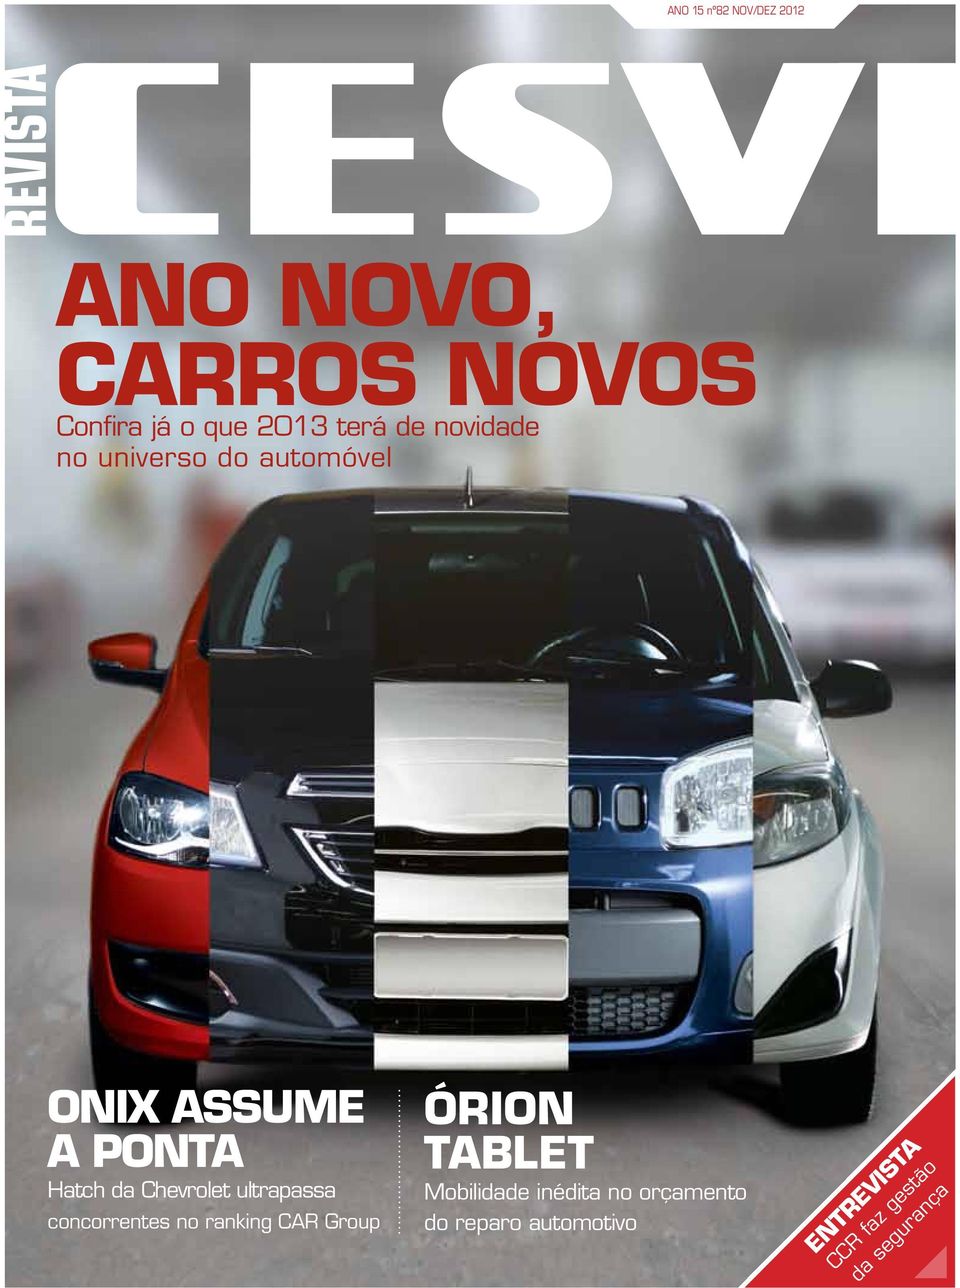 Chevrolet ultrapassa concorrentes no ranking CAR Group ÓRION TABLET